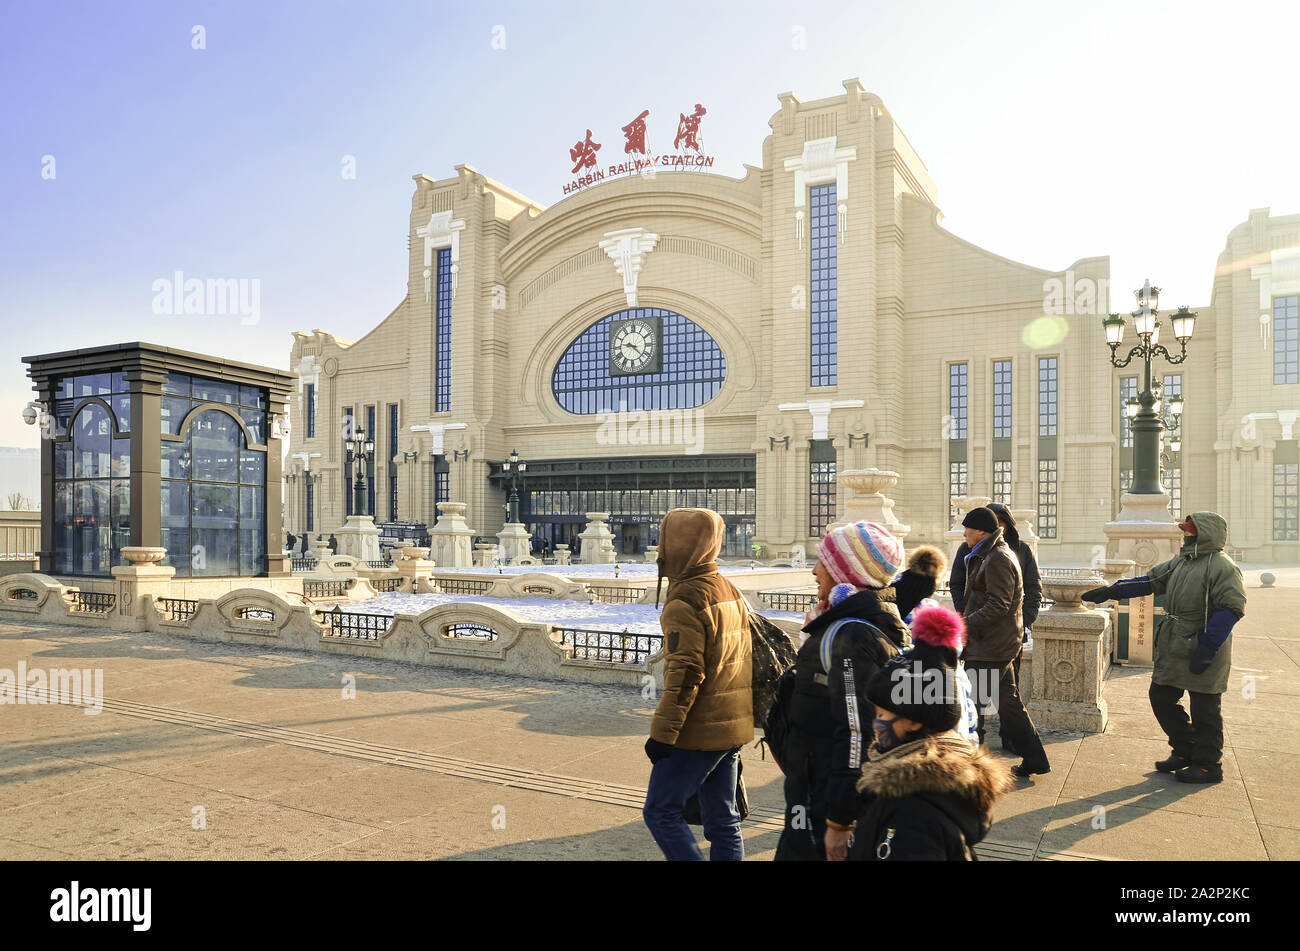 Harbin Railway Station facade building Stock Photo